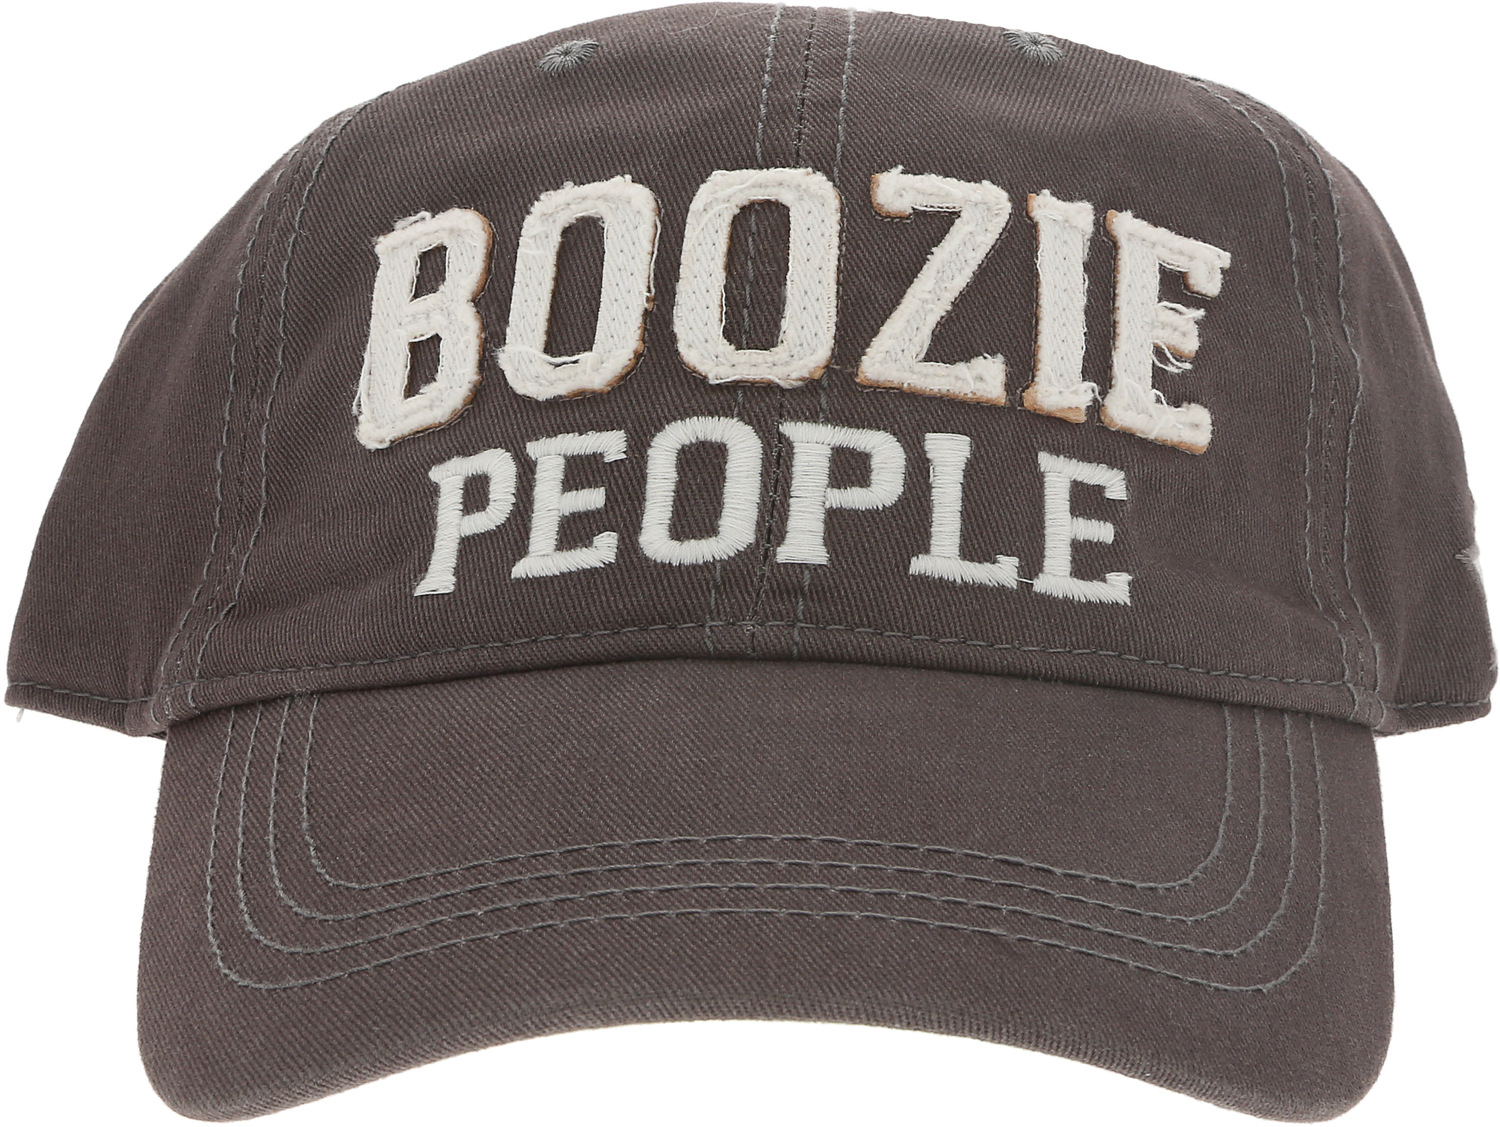 Boozie People by We People - Boozie People - Dark Gray Adjustable Hat